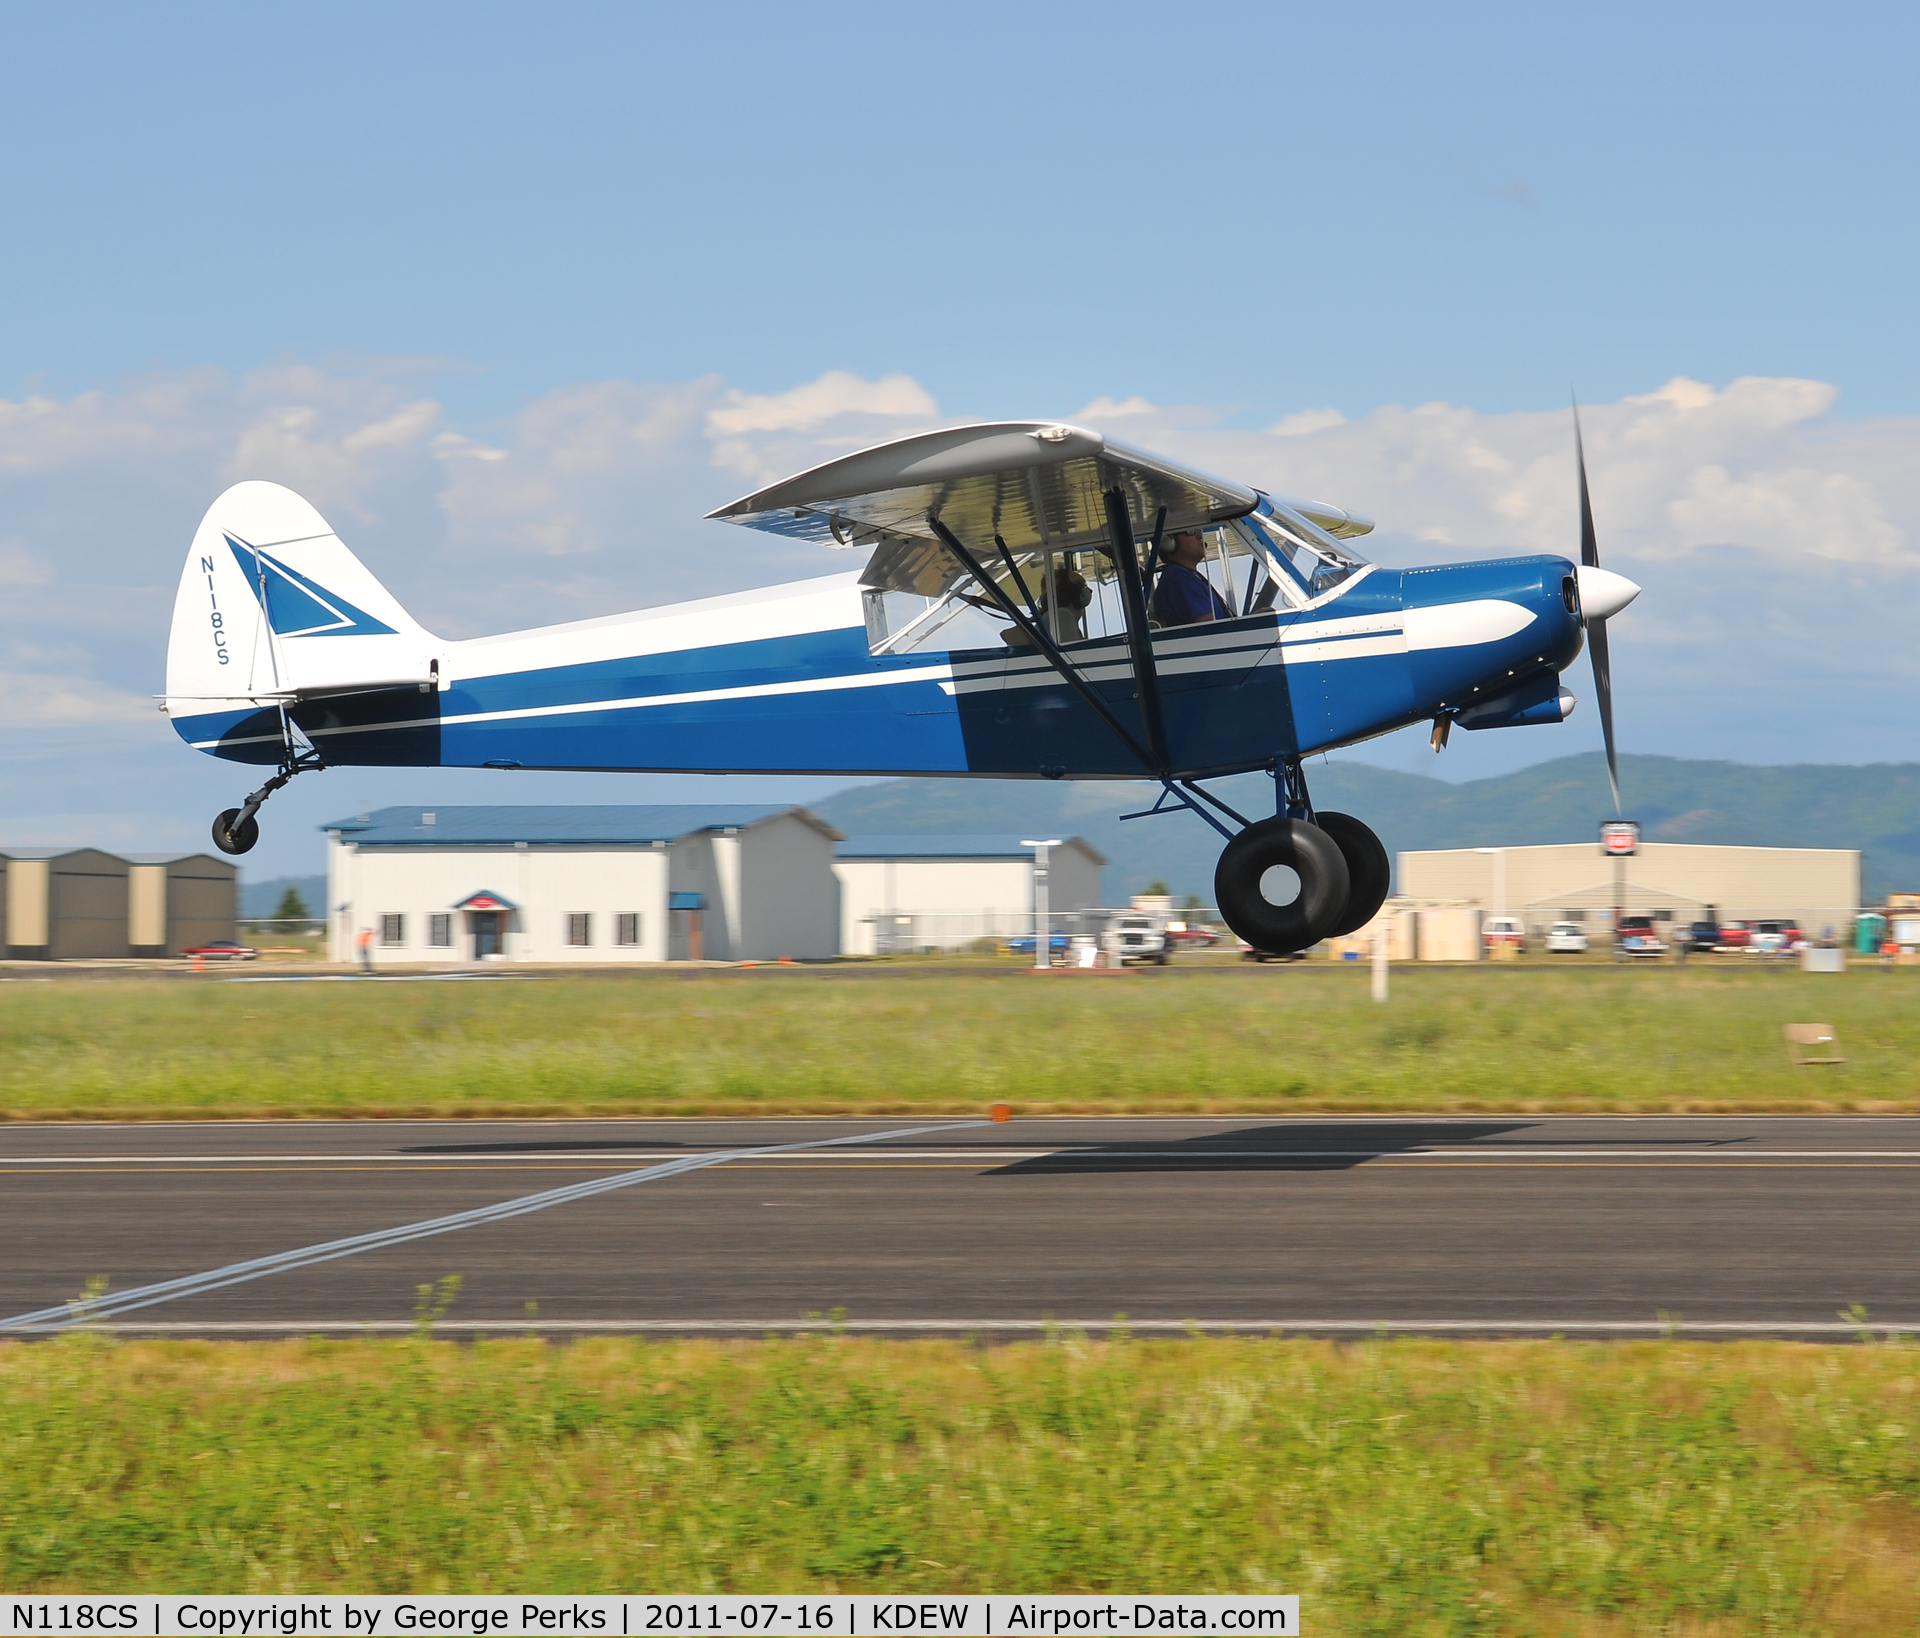 N118CS, Piper PA-18 Super Cub Replica C/N 001, N118CS landing